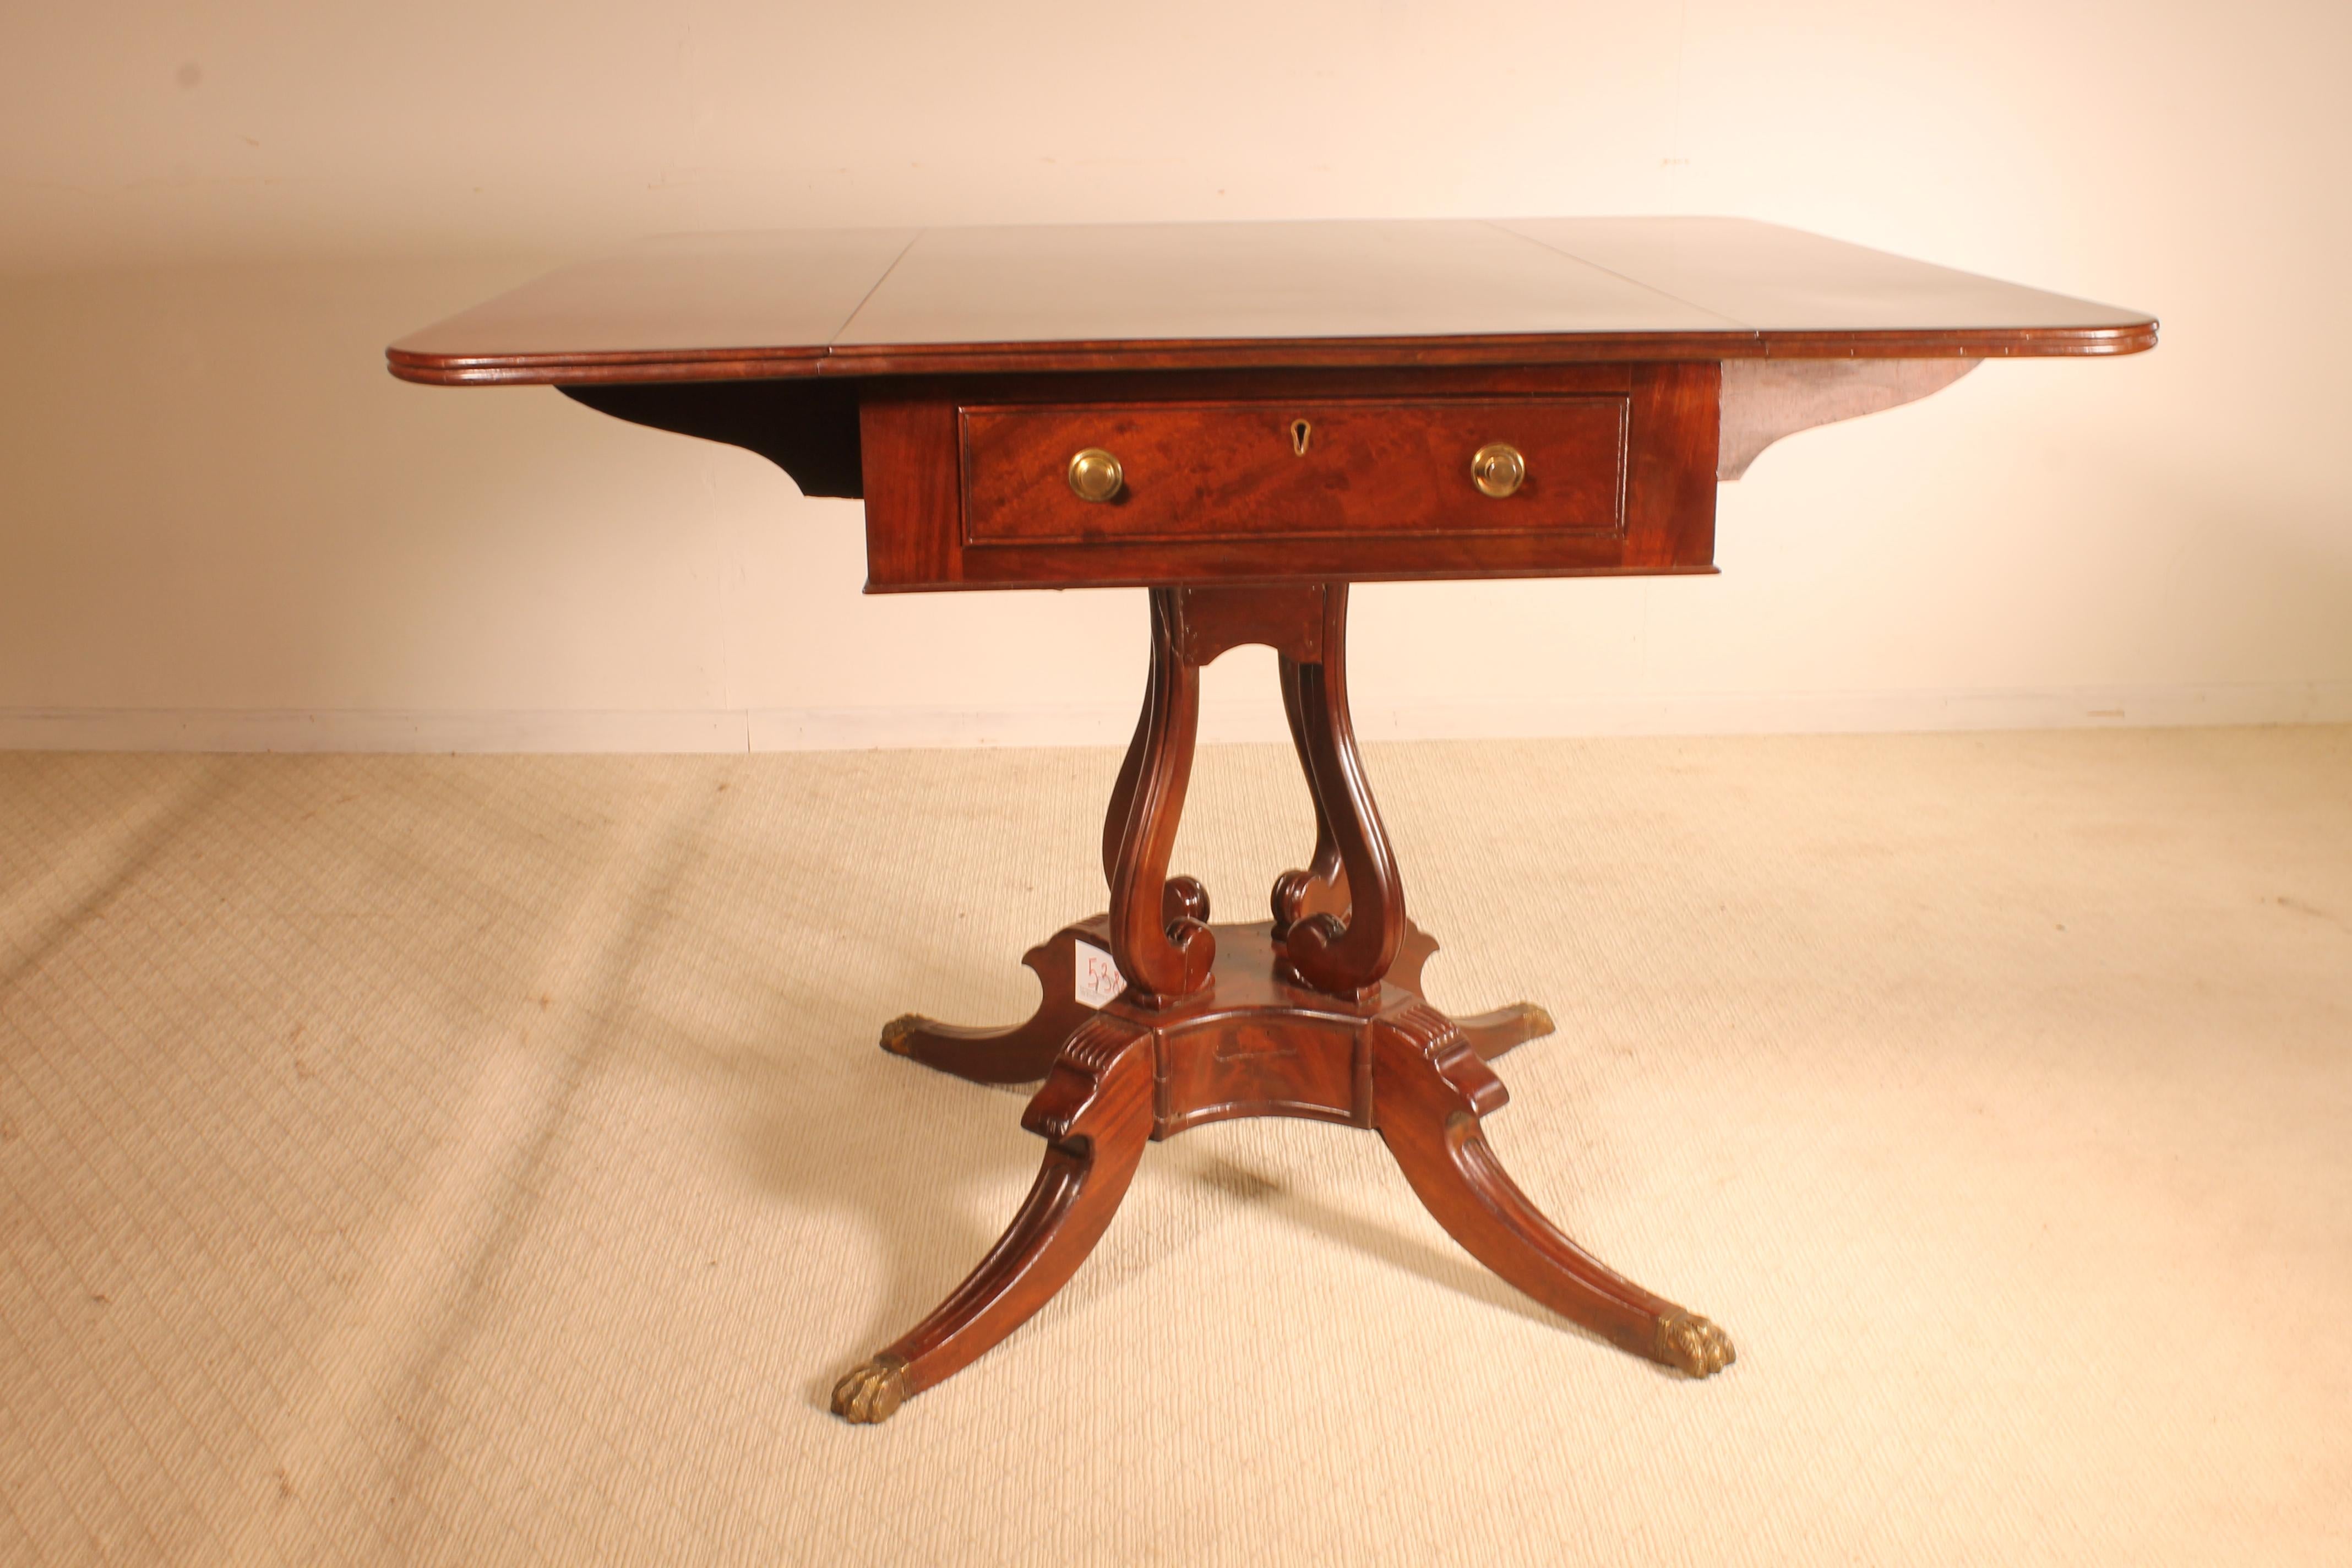 Regency-Trommeltisch oder Kartentisch aus Mahagoni im Regency-Stil (19. Jahrhundert) im Angebot